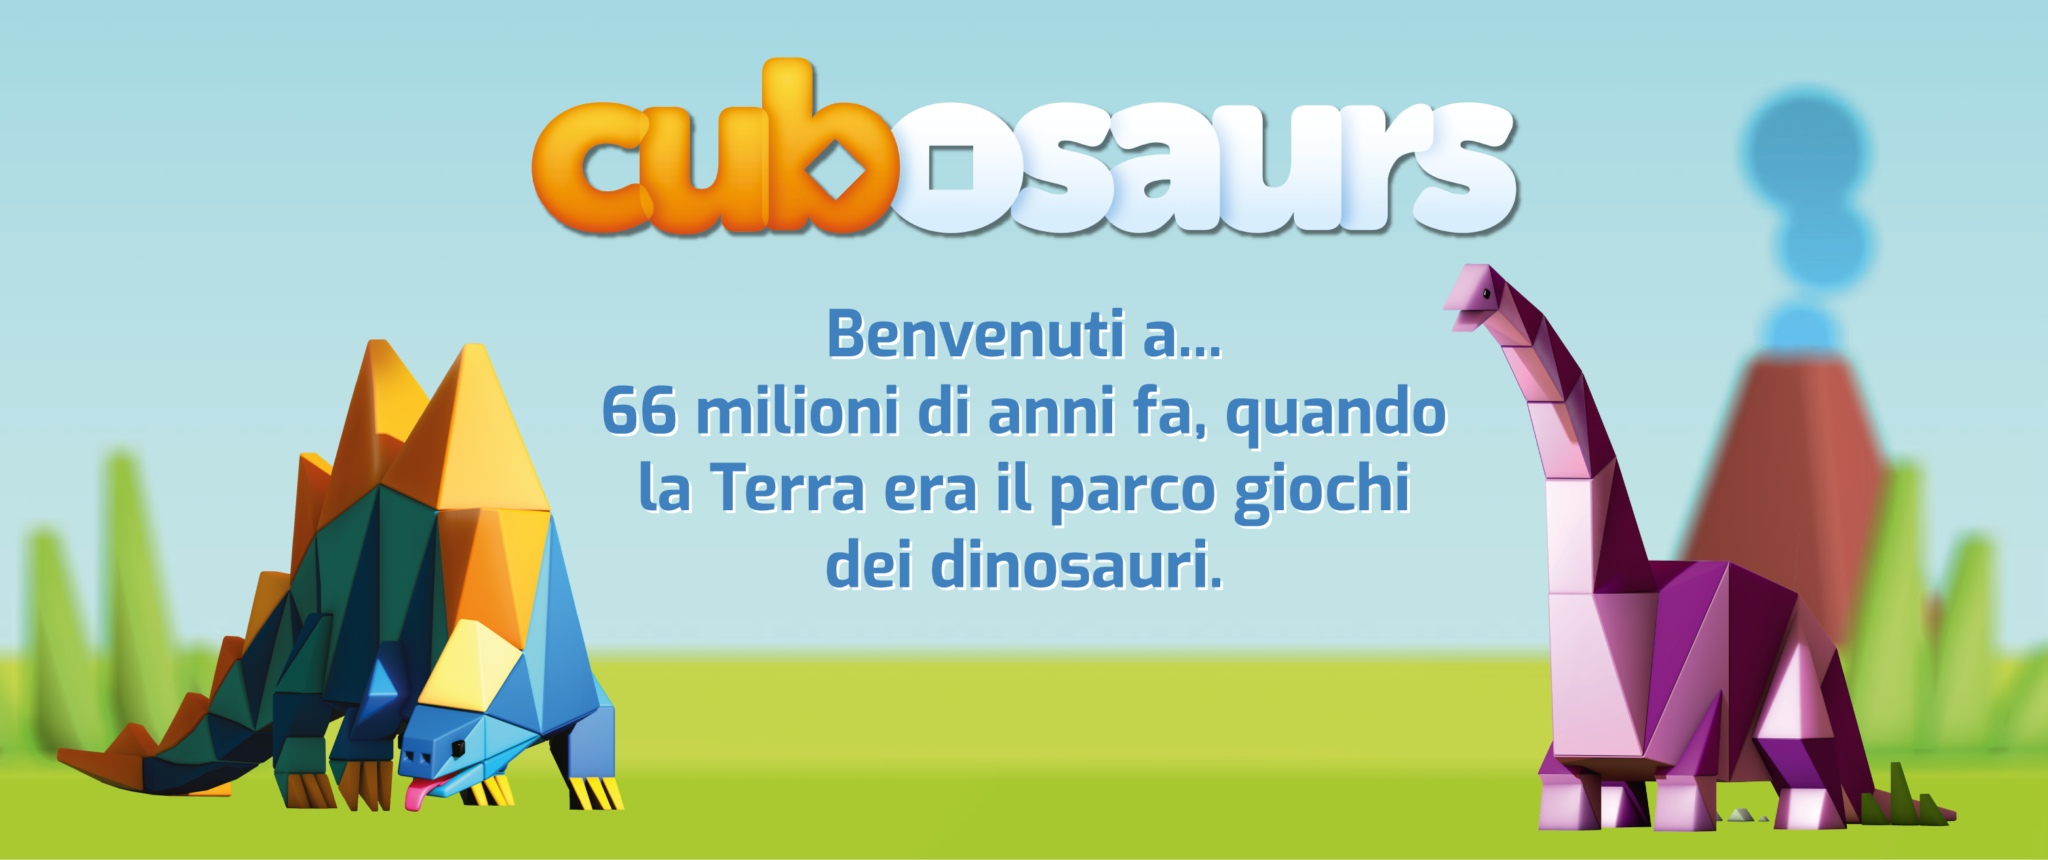 Cubosaurs_Ms-Edizioni-2048x860